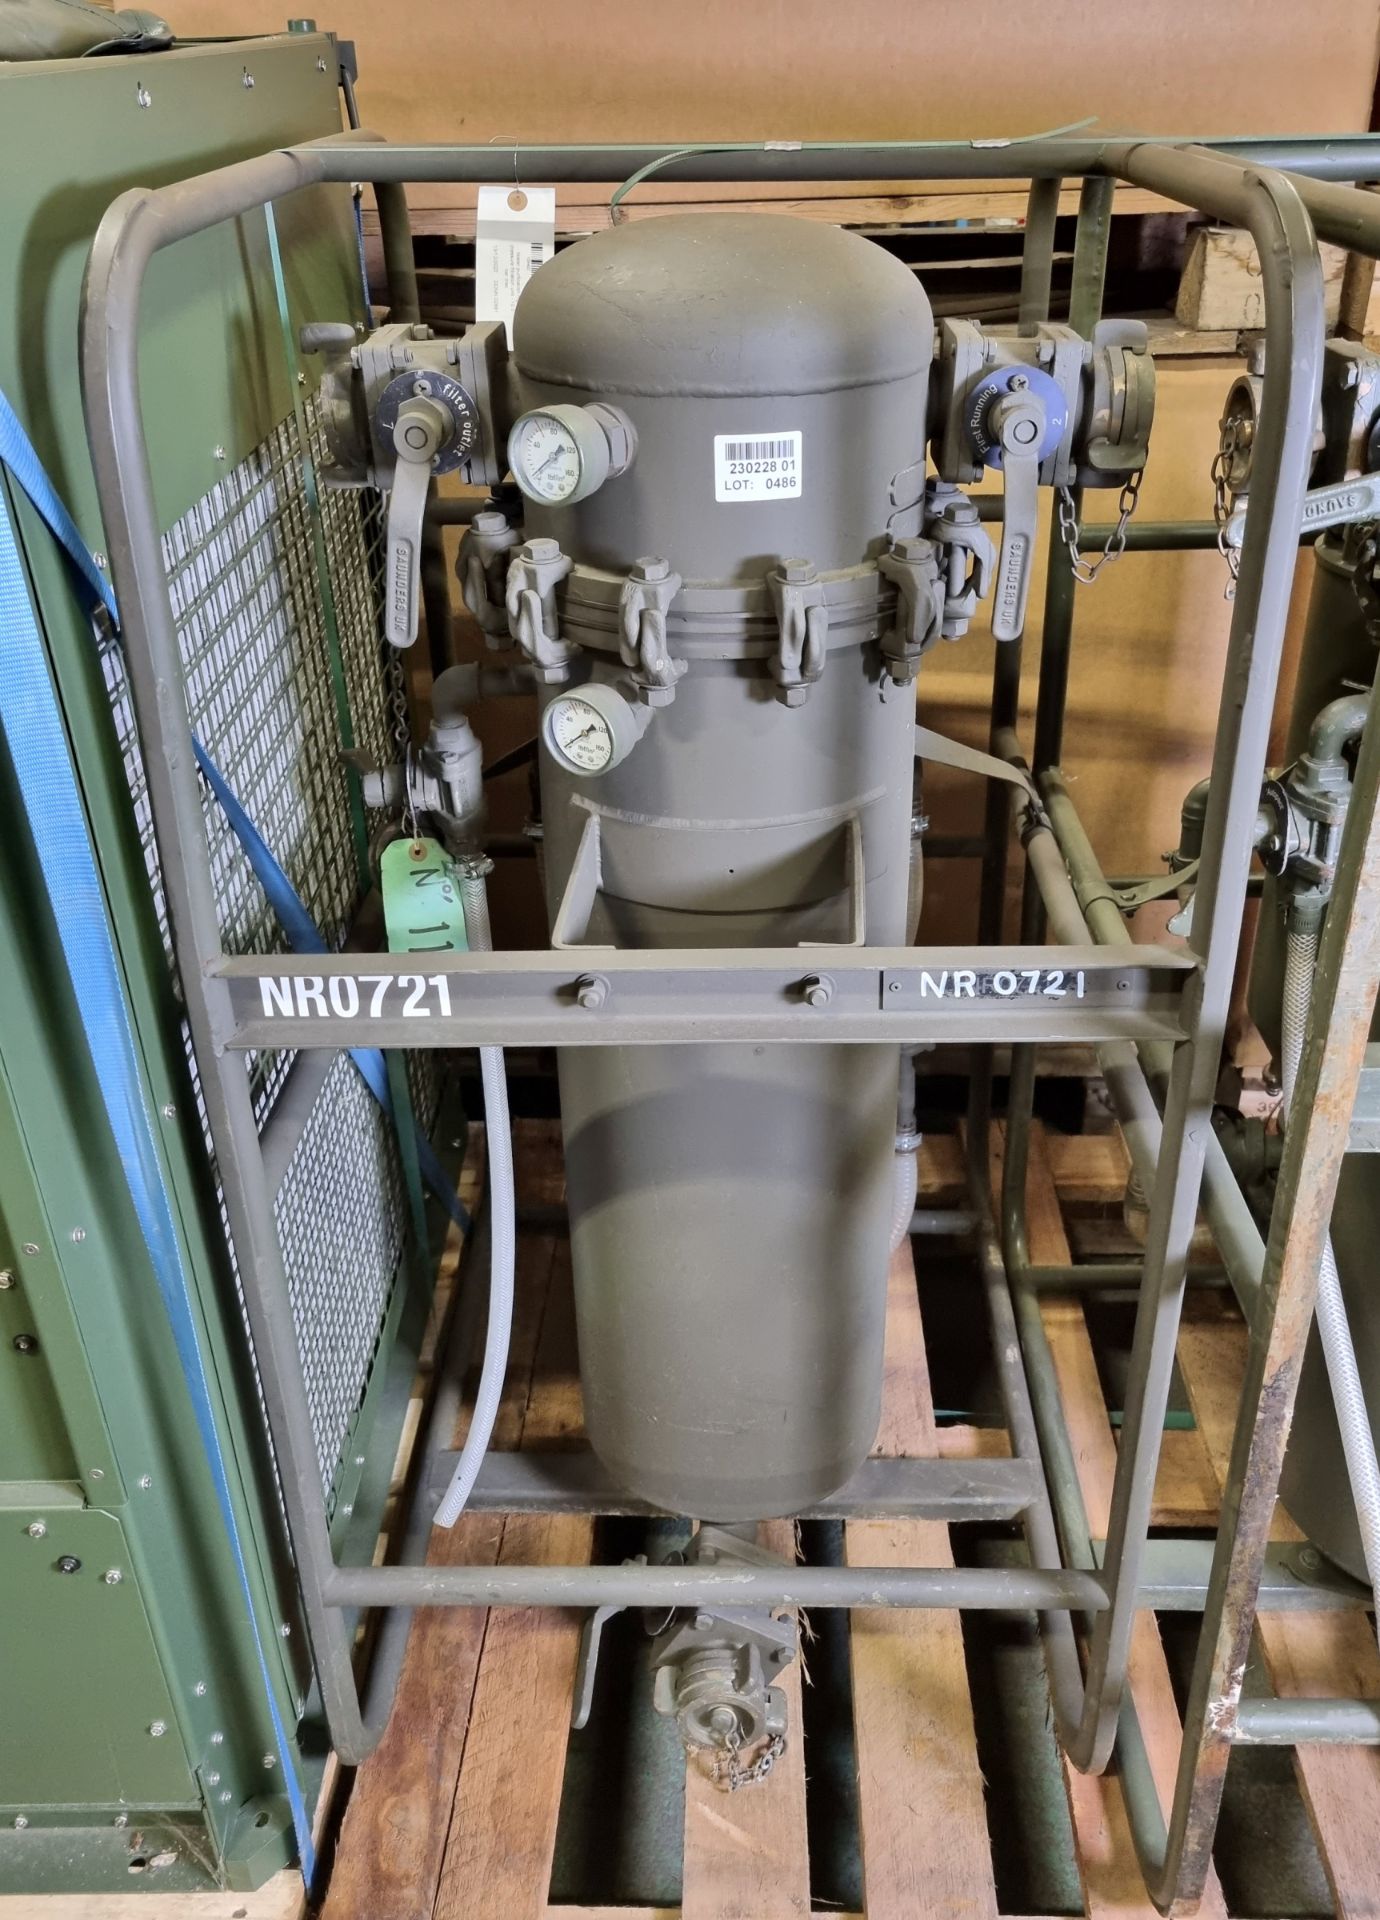 Water purification high pressure filtration unit - 10.5 bar max